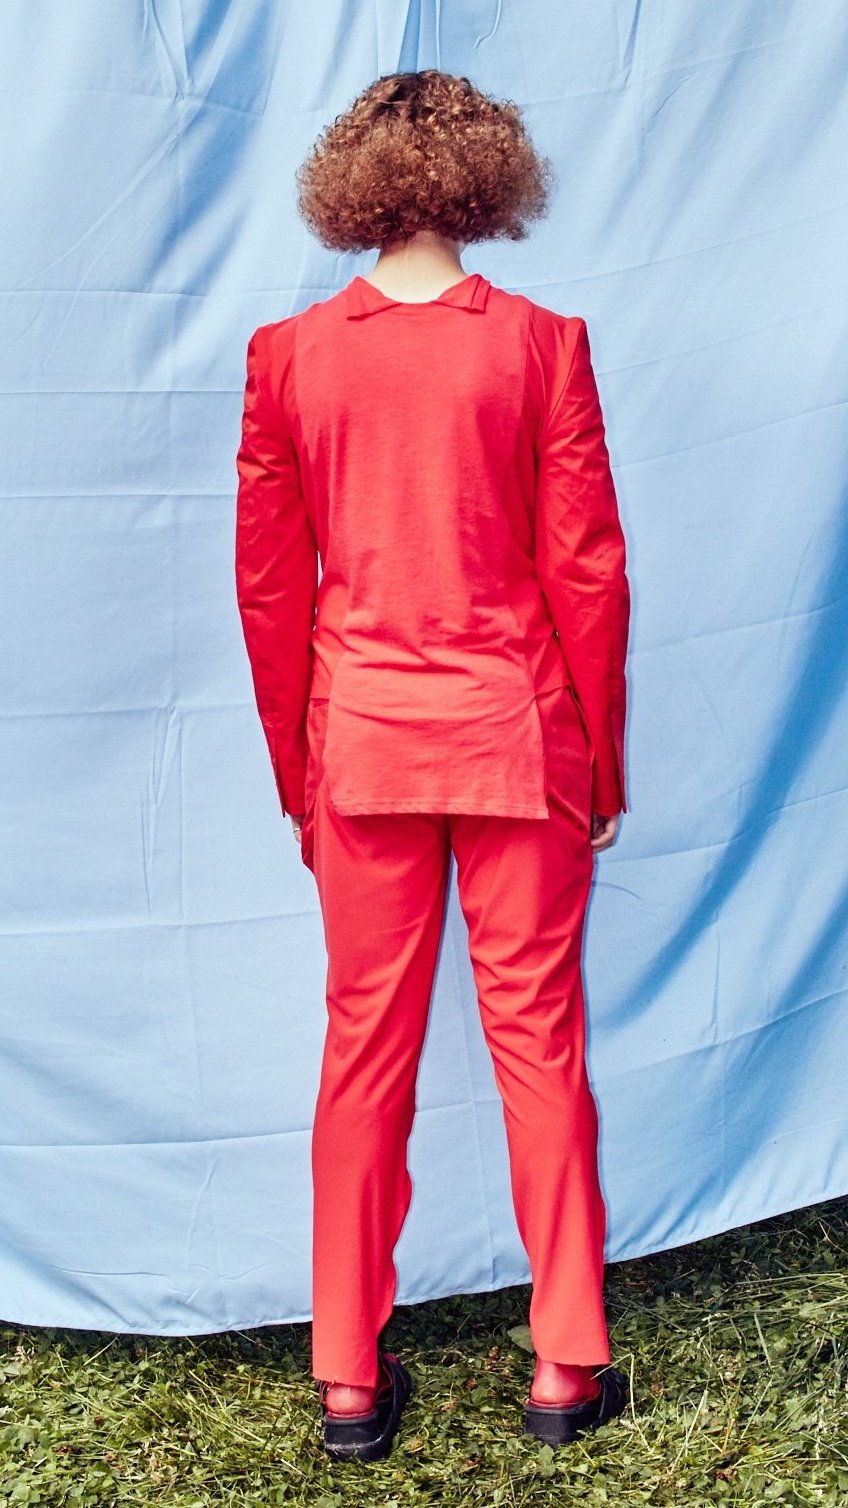 pvr-manifesto4-red-suit-back.jpg